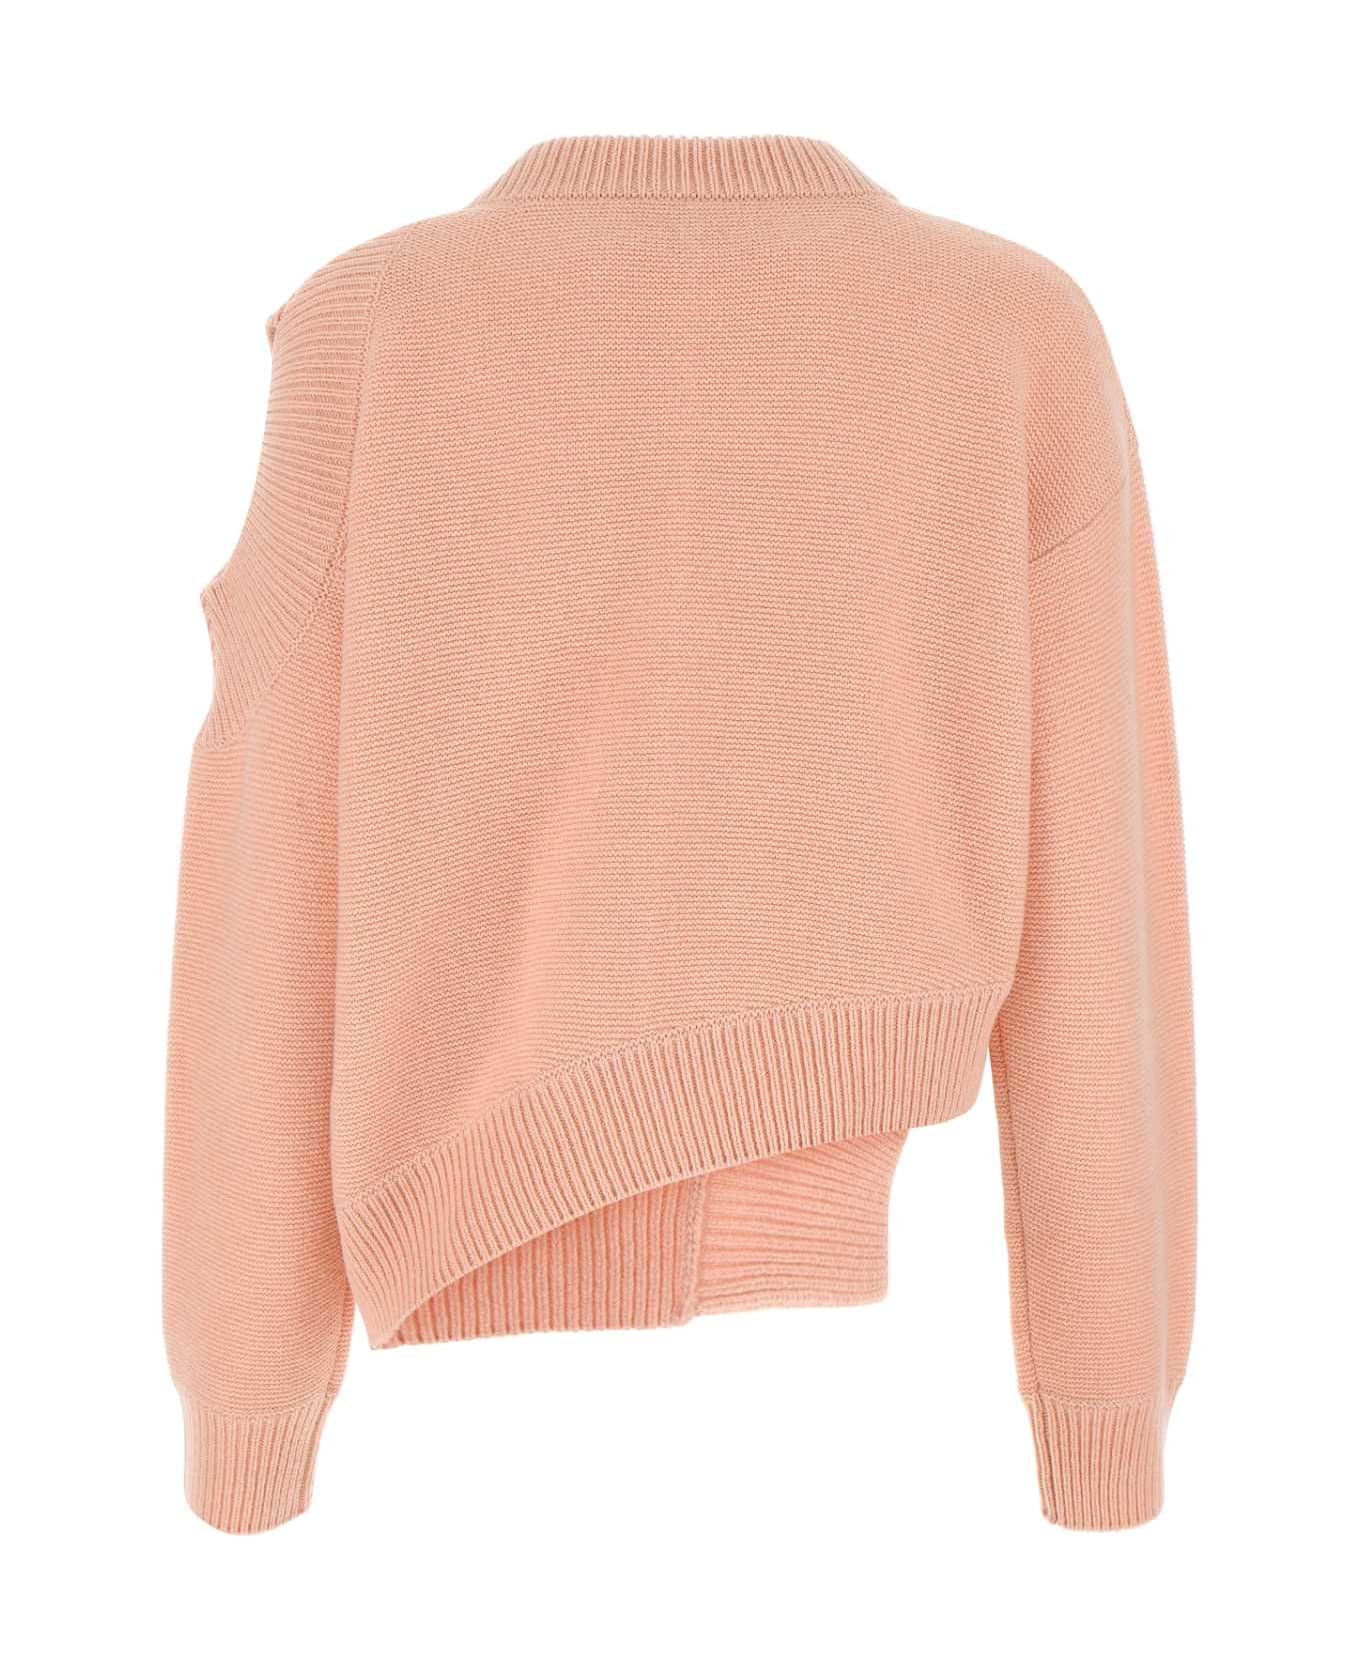 Stella McCartney Pink Cashmere Blend Sweater - 5554